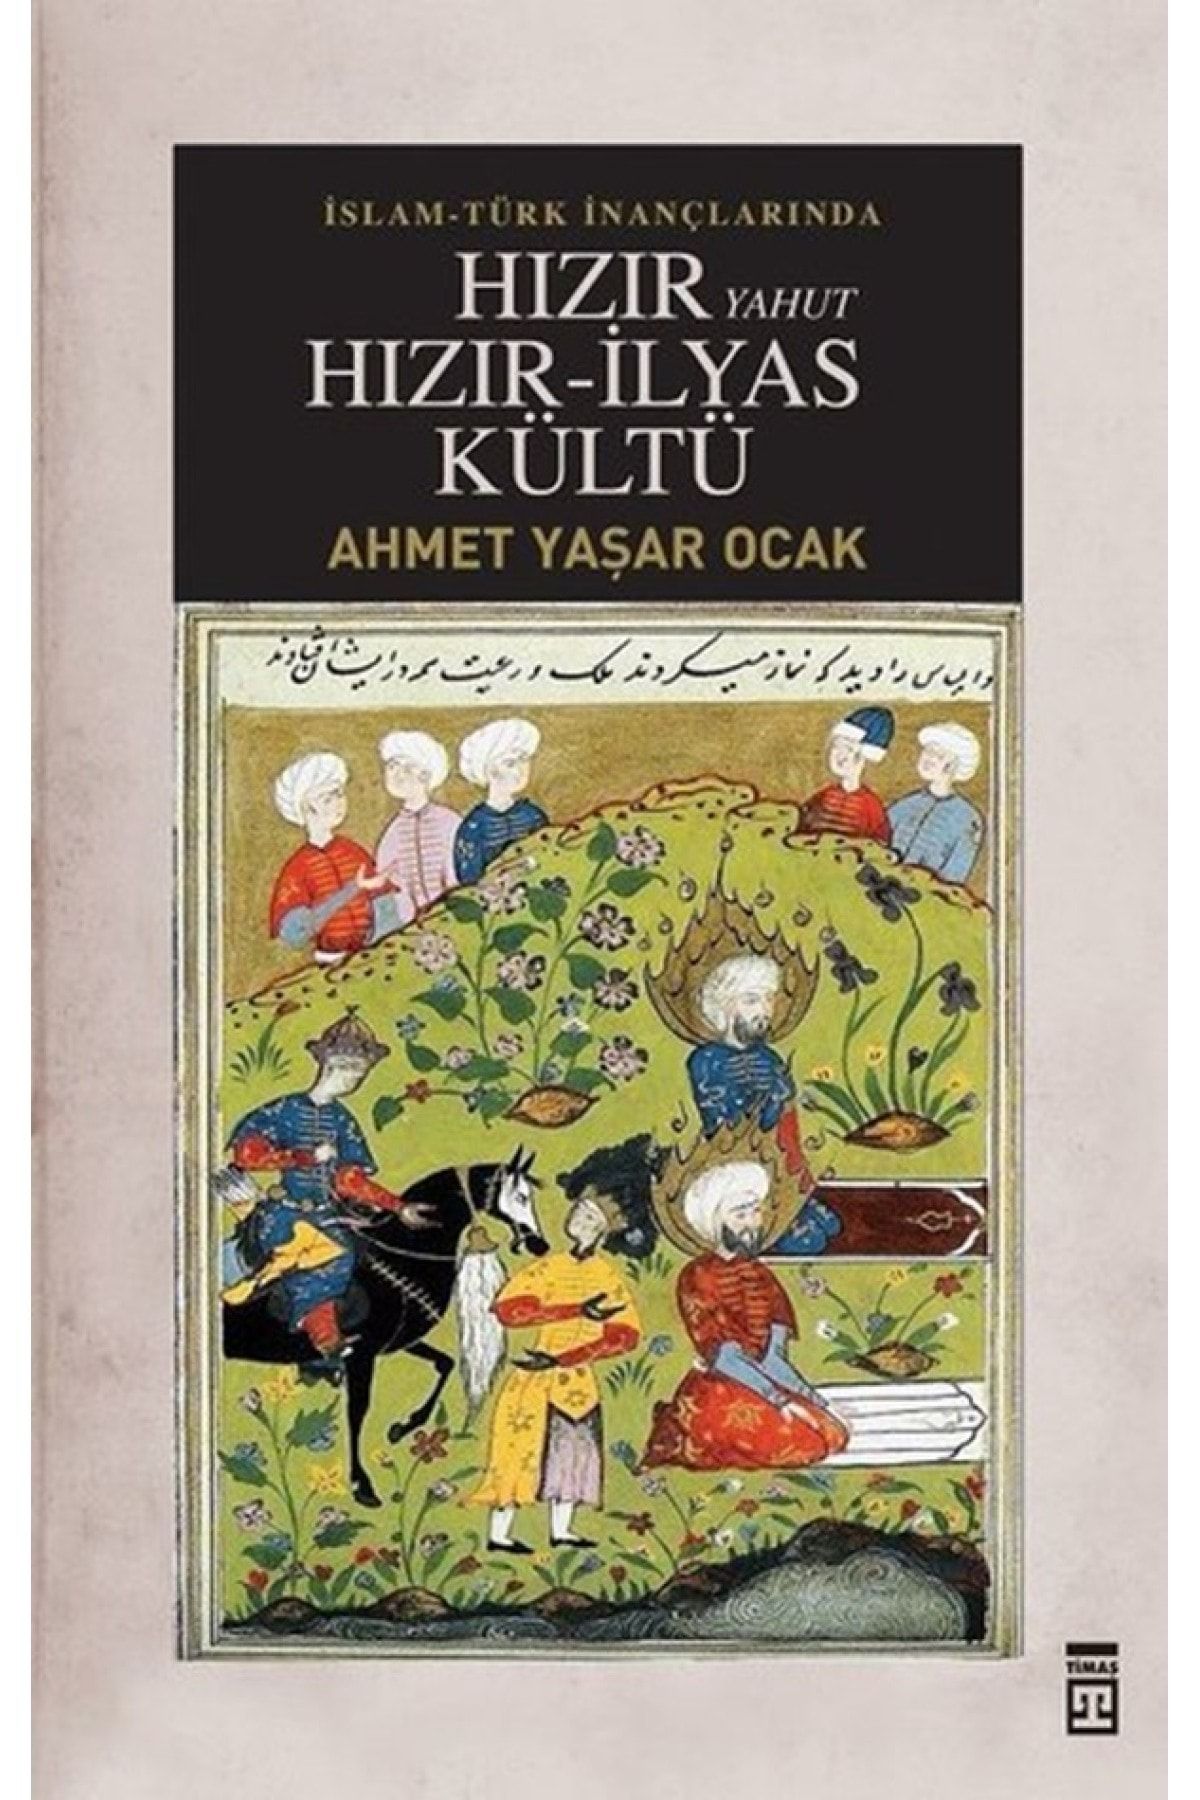 Timaş Yayınları İslam-Türk İnançlarında Hızır Yahut Hızır İlyas Kültü kitabı - Ahmet Yaşar Ocak - Timaş Yayınları